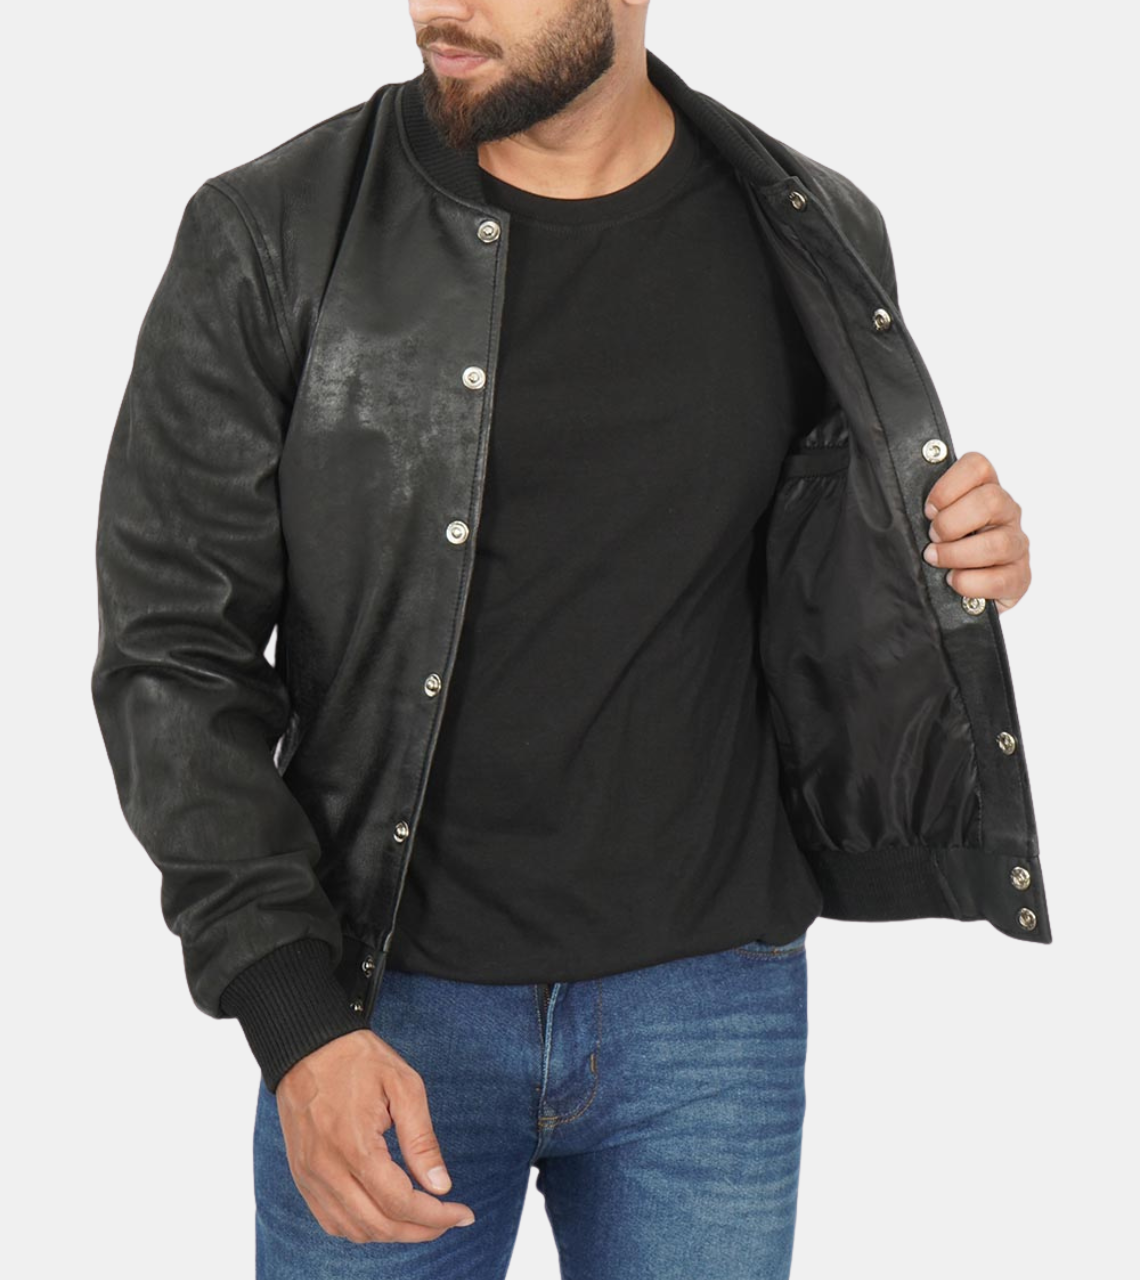 Men's Black Bomber Leather Jacket